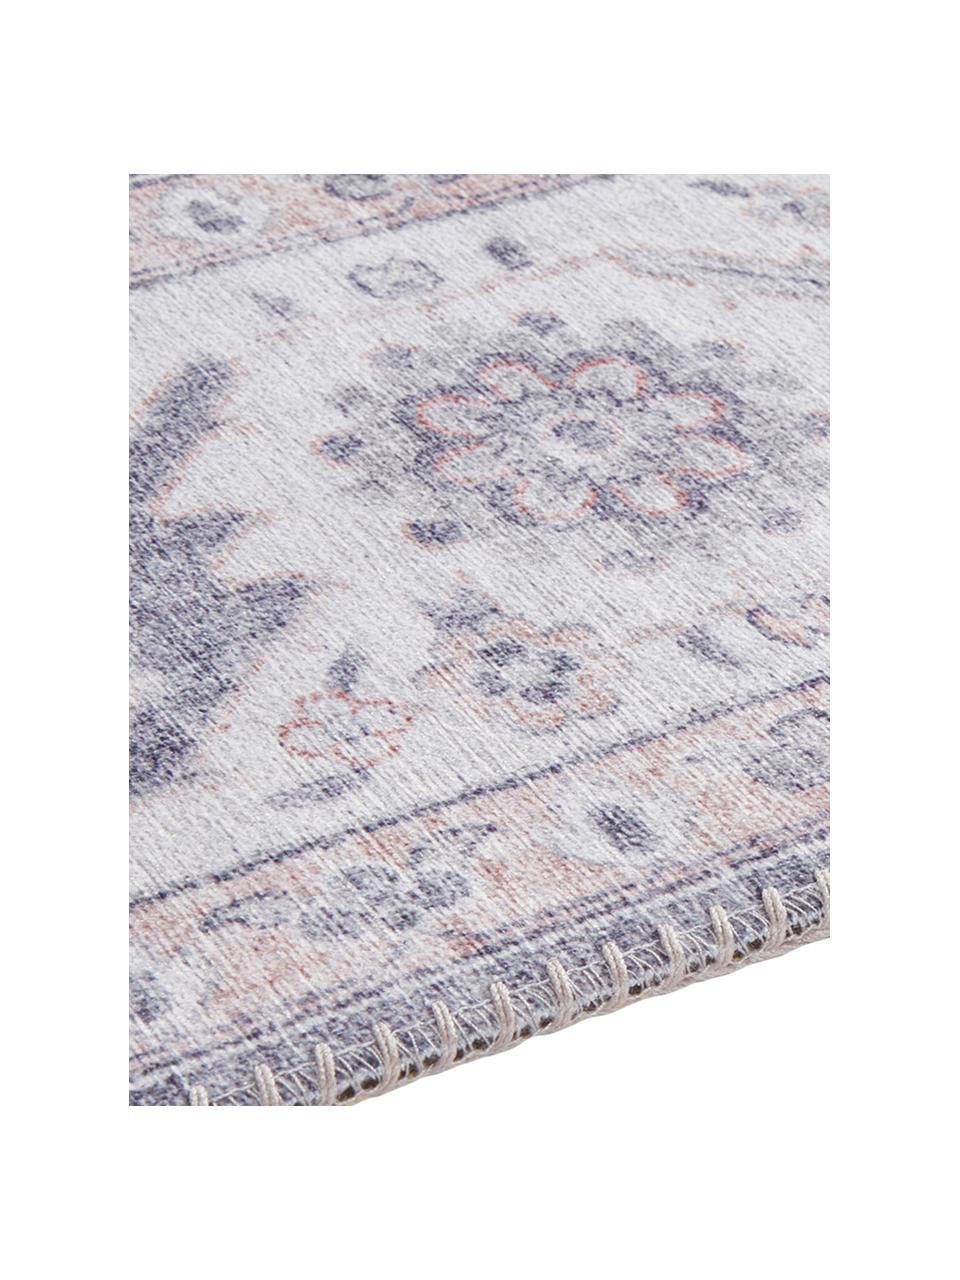 Teppich Anthea im Vintage Style, Blau-Grau, Mauve, B 200 x L 290 cm (Größe L)